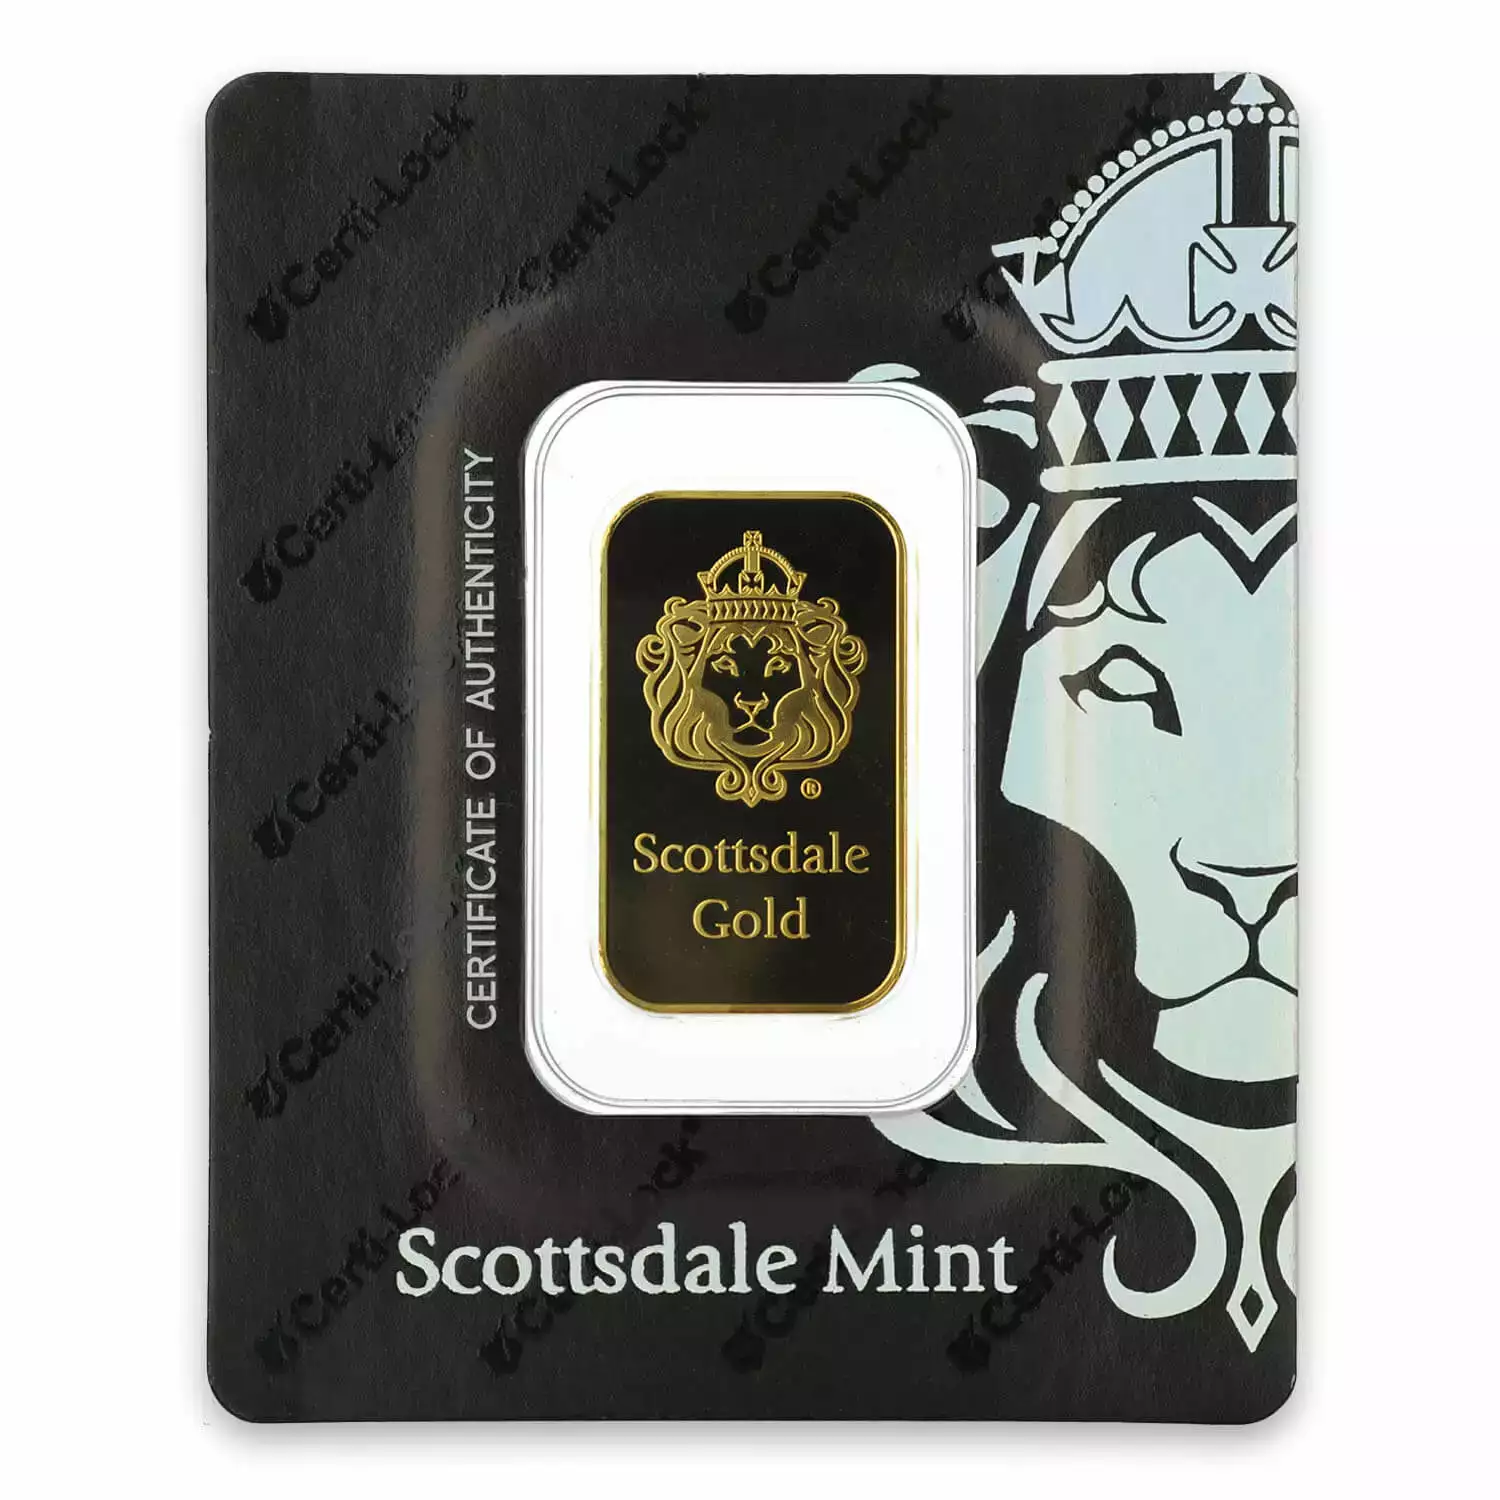 Scottsdale Mint 10g Gold Lion Bar in Certilock